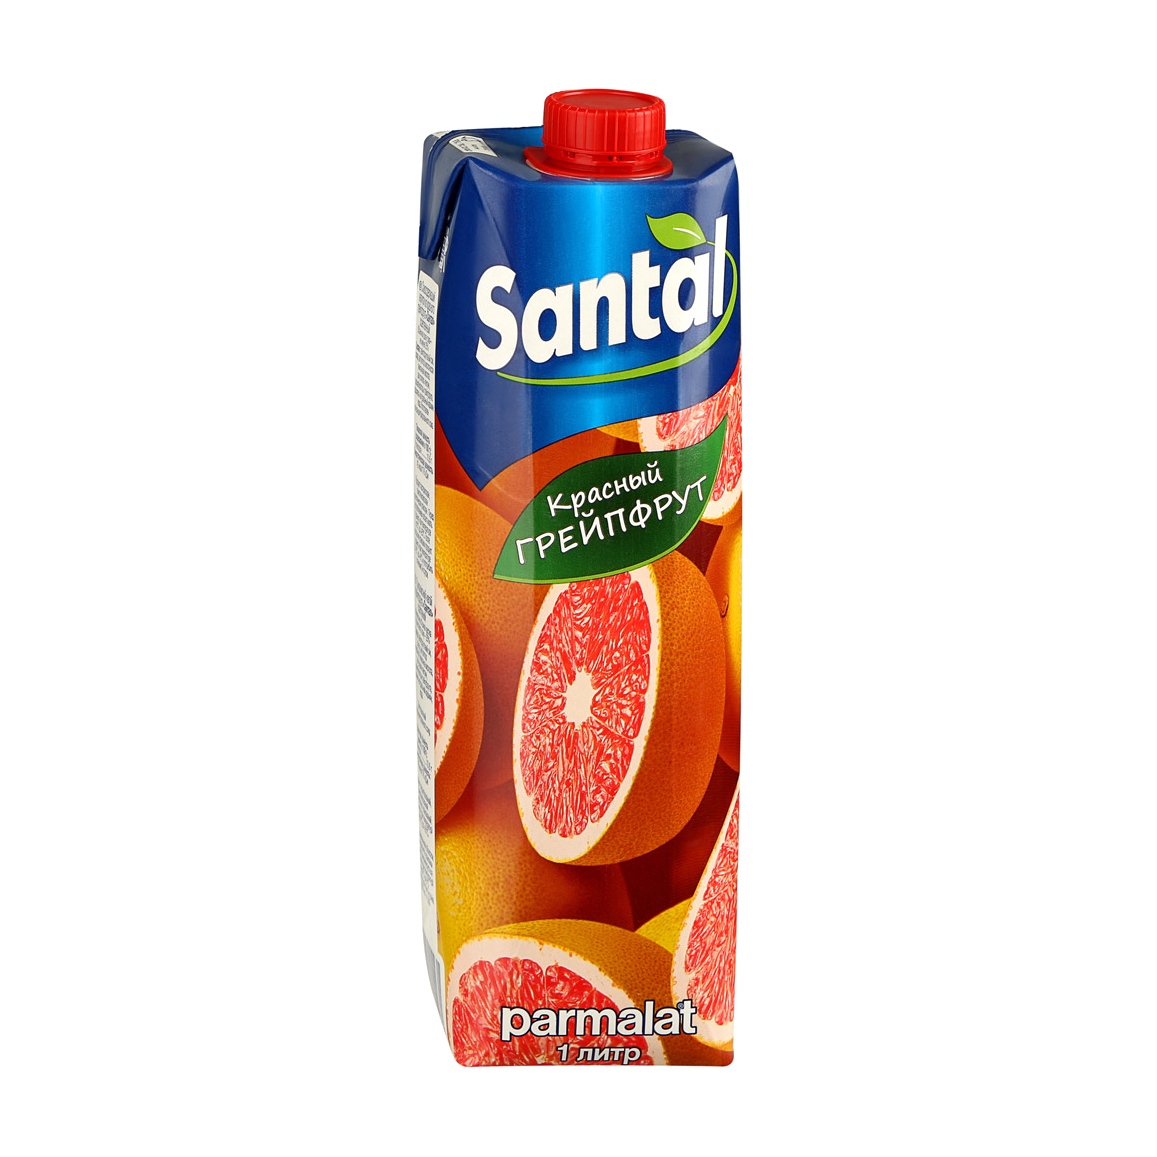 Напиток Santal красный грейпфрут 1 л сокосодержащий напиток rich dolce яблоки вишня грейпфрут с ароматом черешни 0 33 литра газ ж б 12 шт в уп